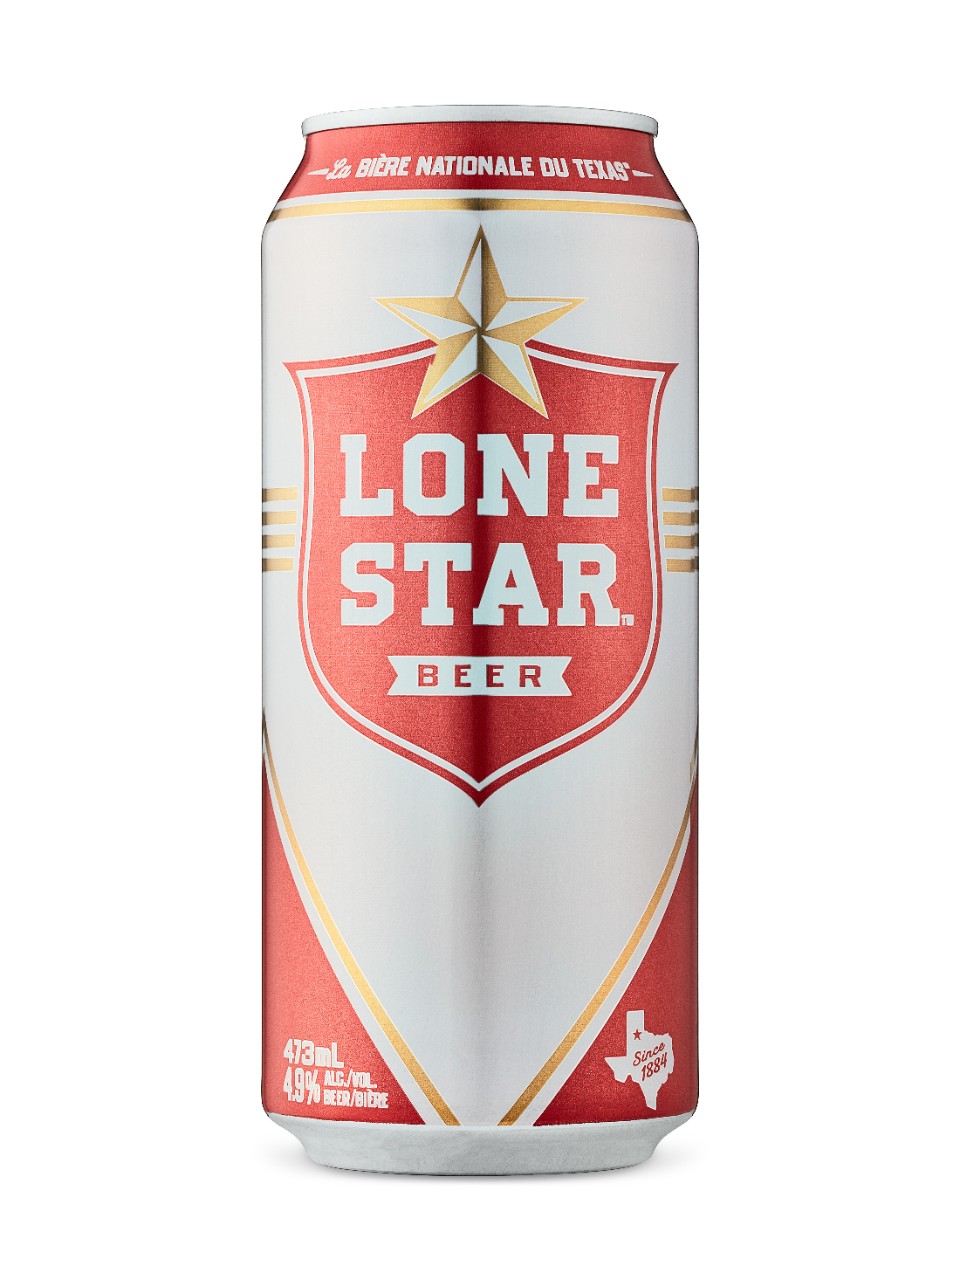 5. Lone Star